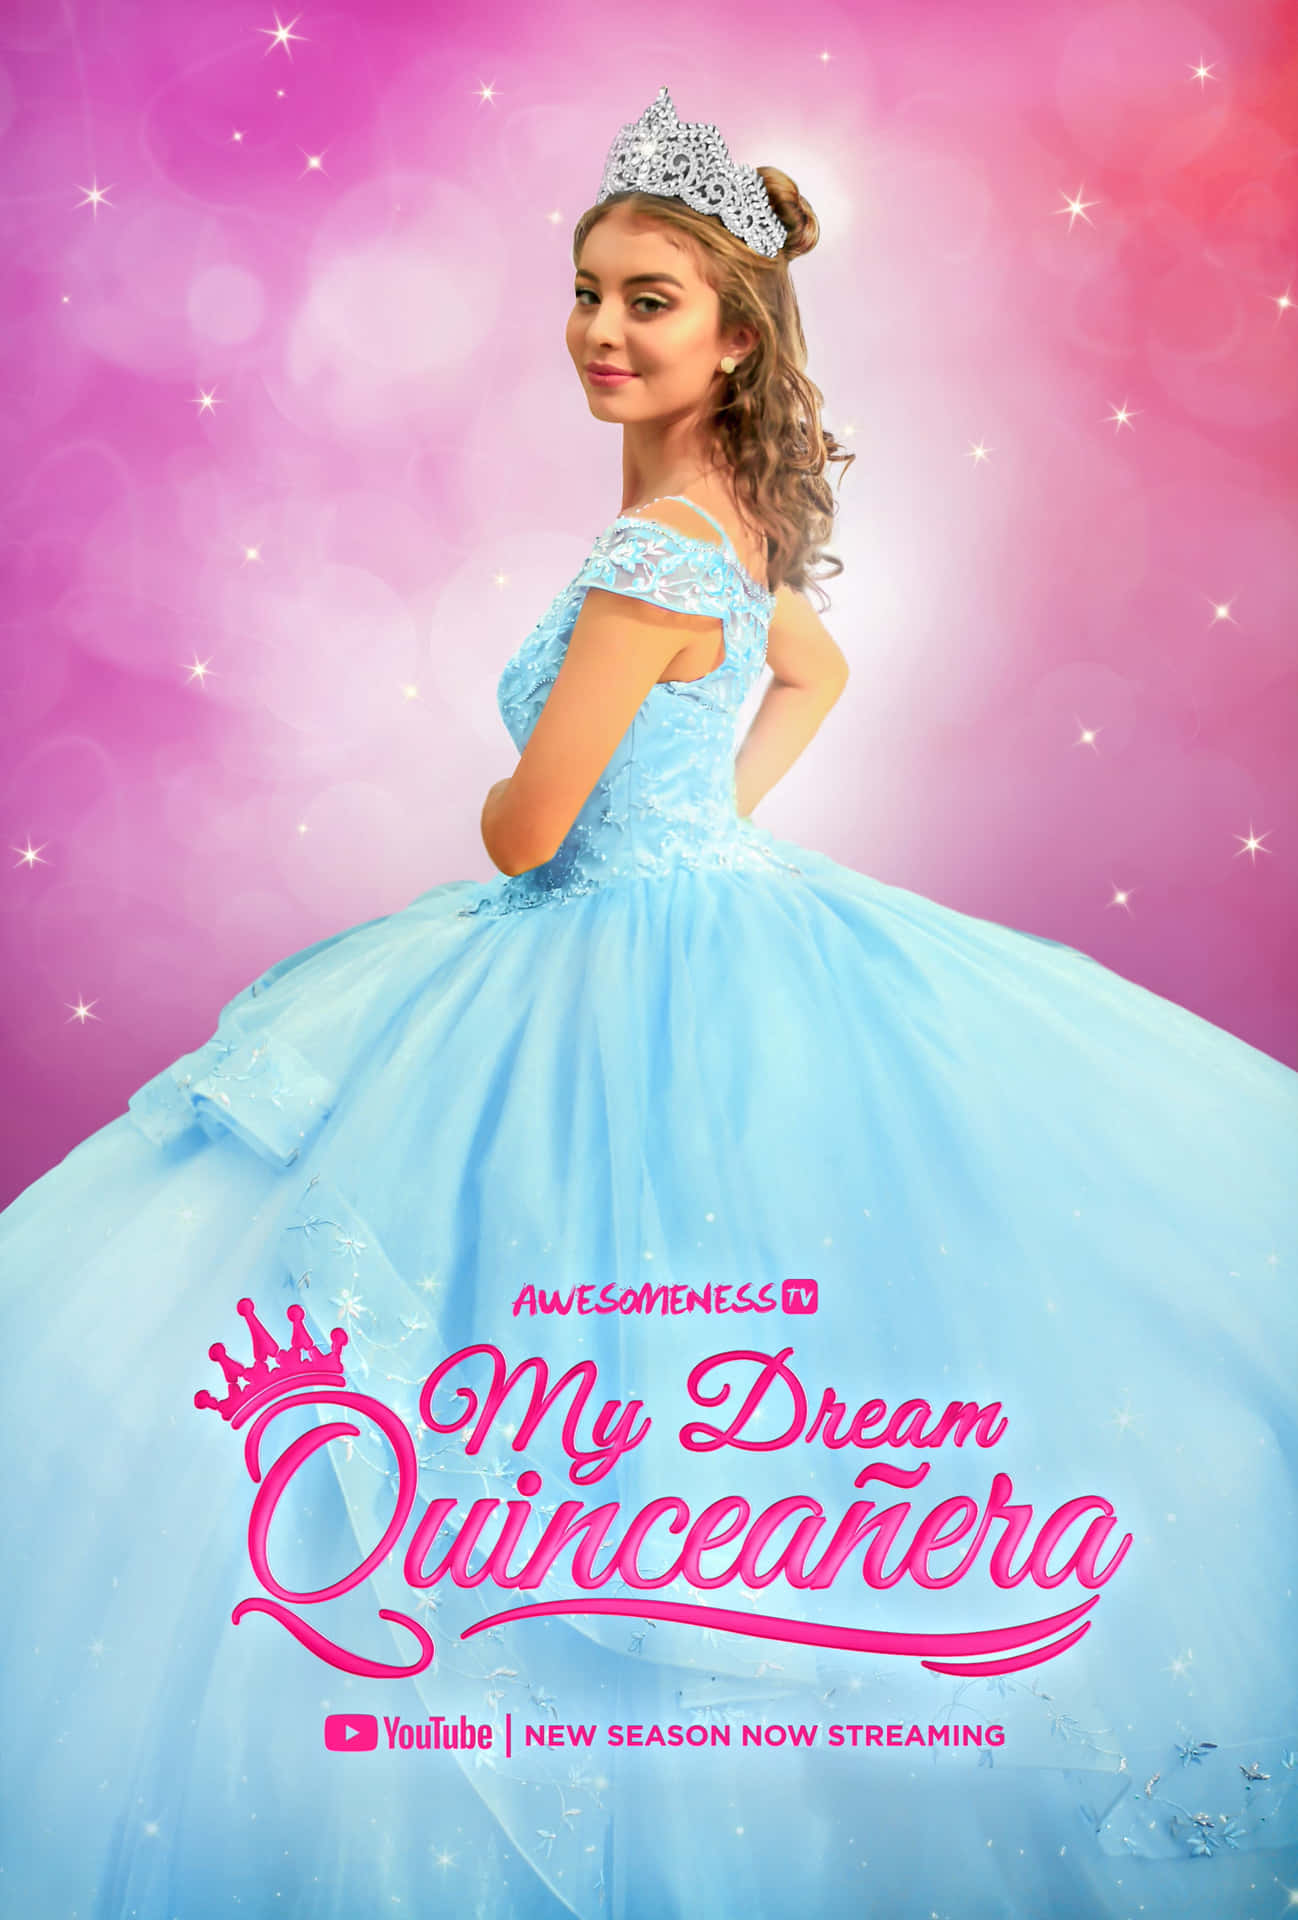 My Dream Quinceanera - A Girl In A Blue Dress